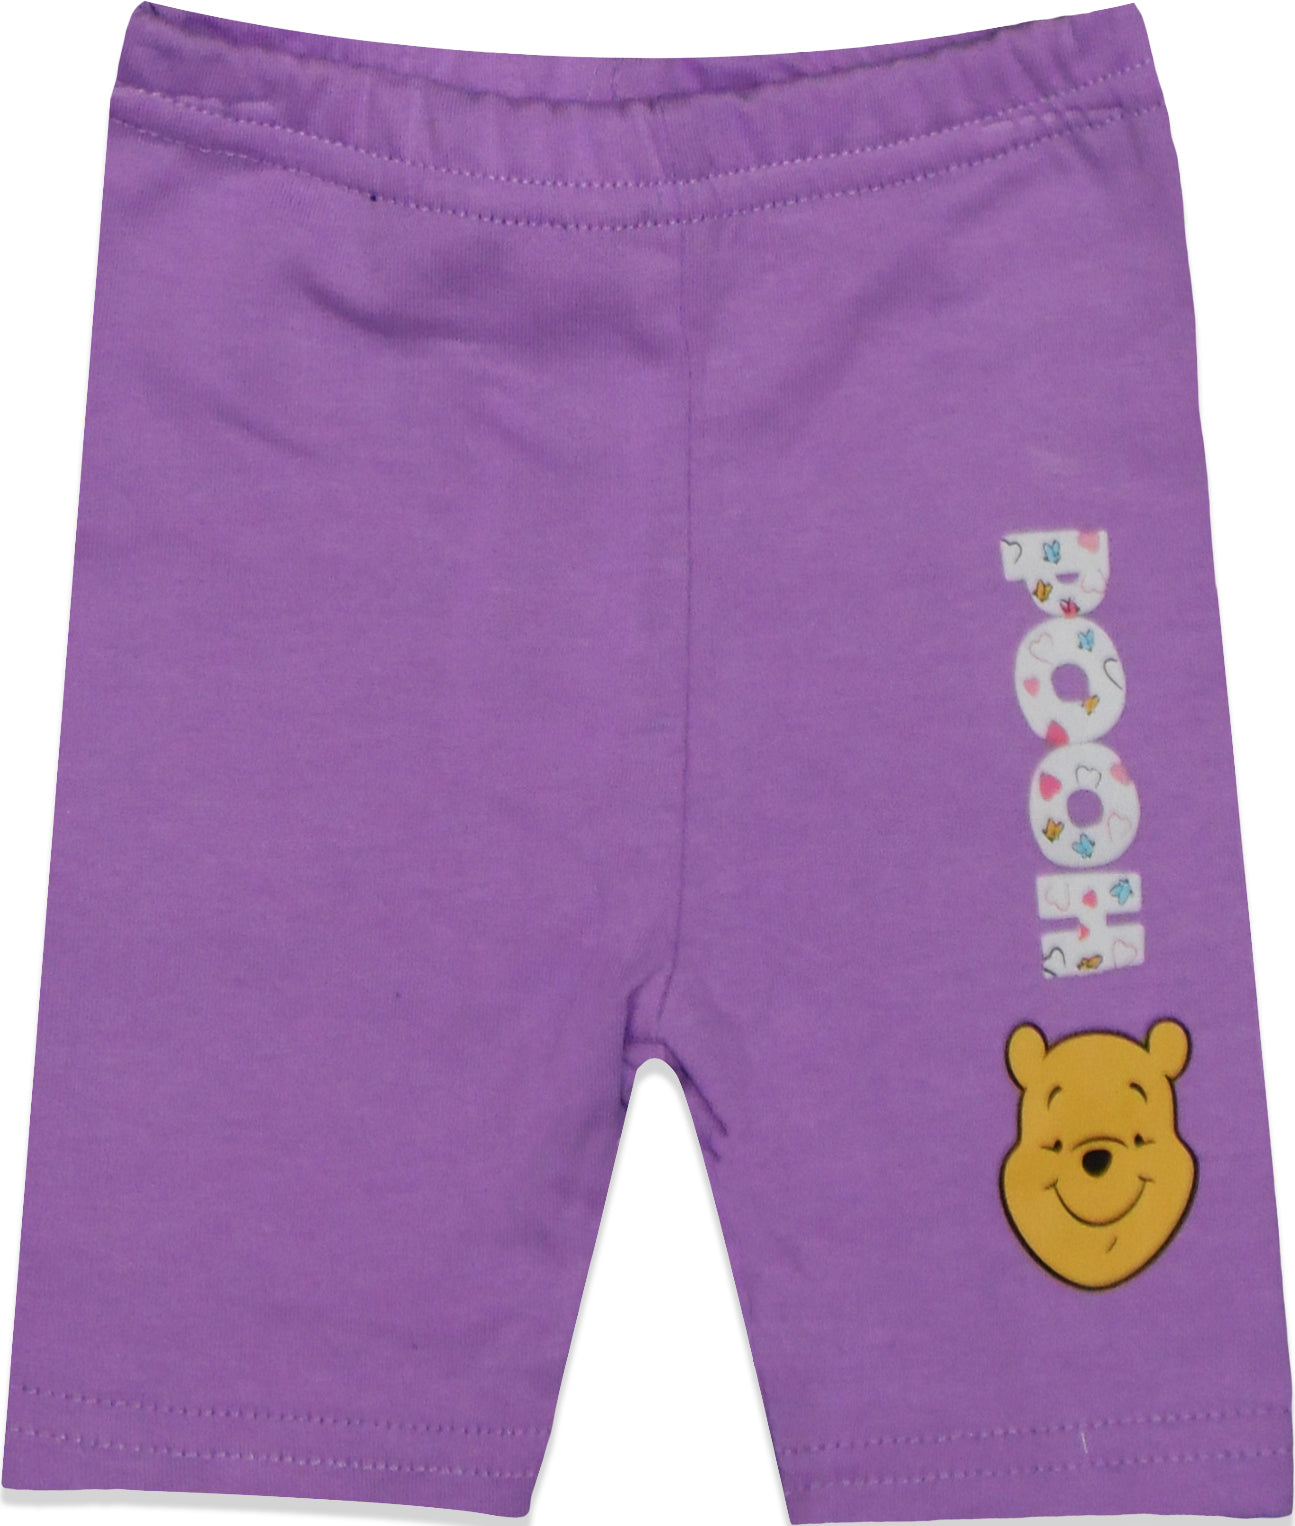 Disney Baby Winnie the Pooh Clothing Set